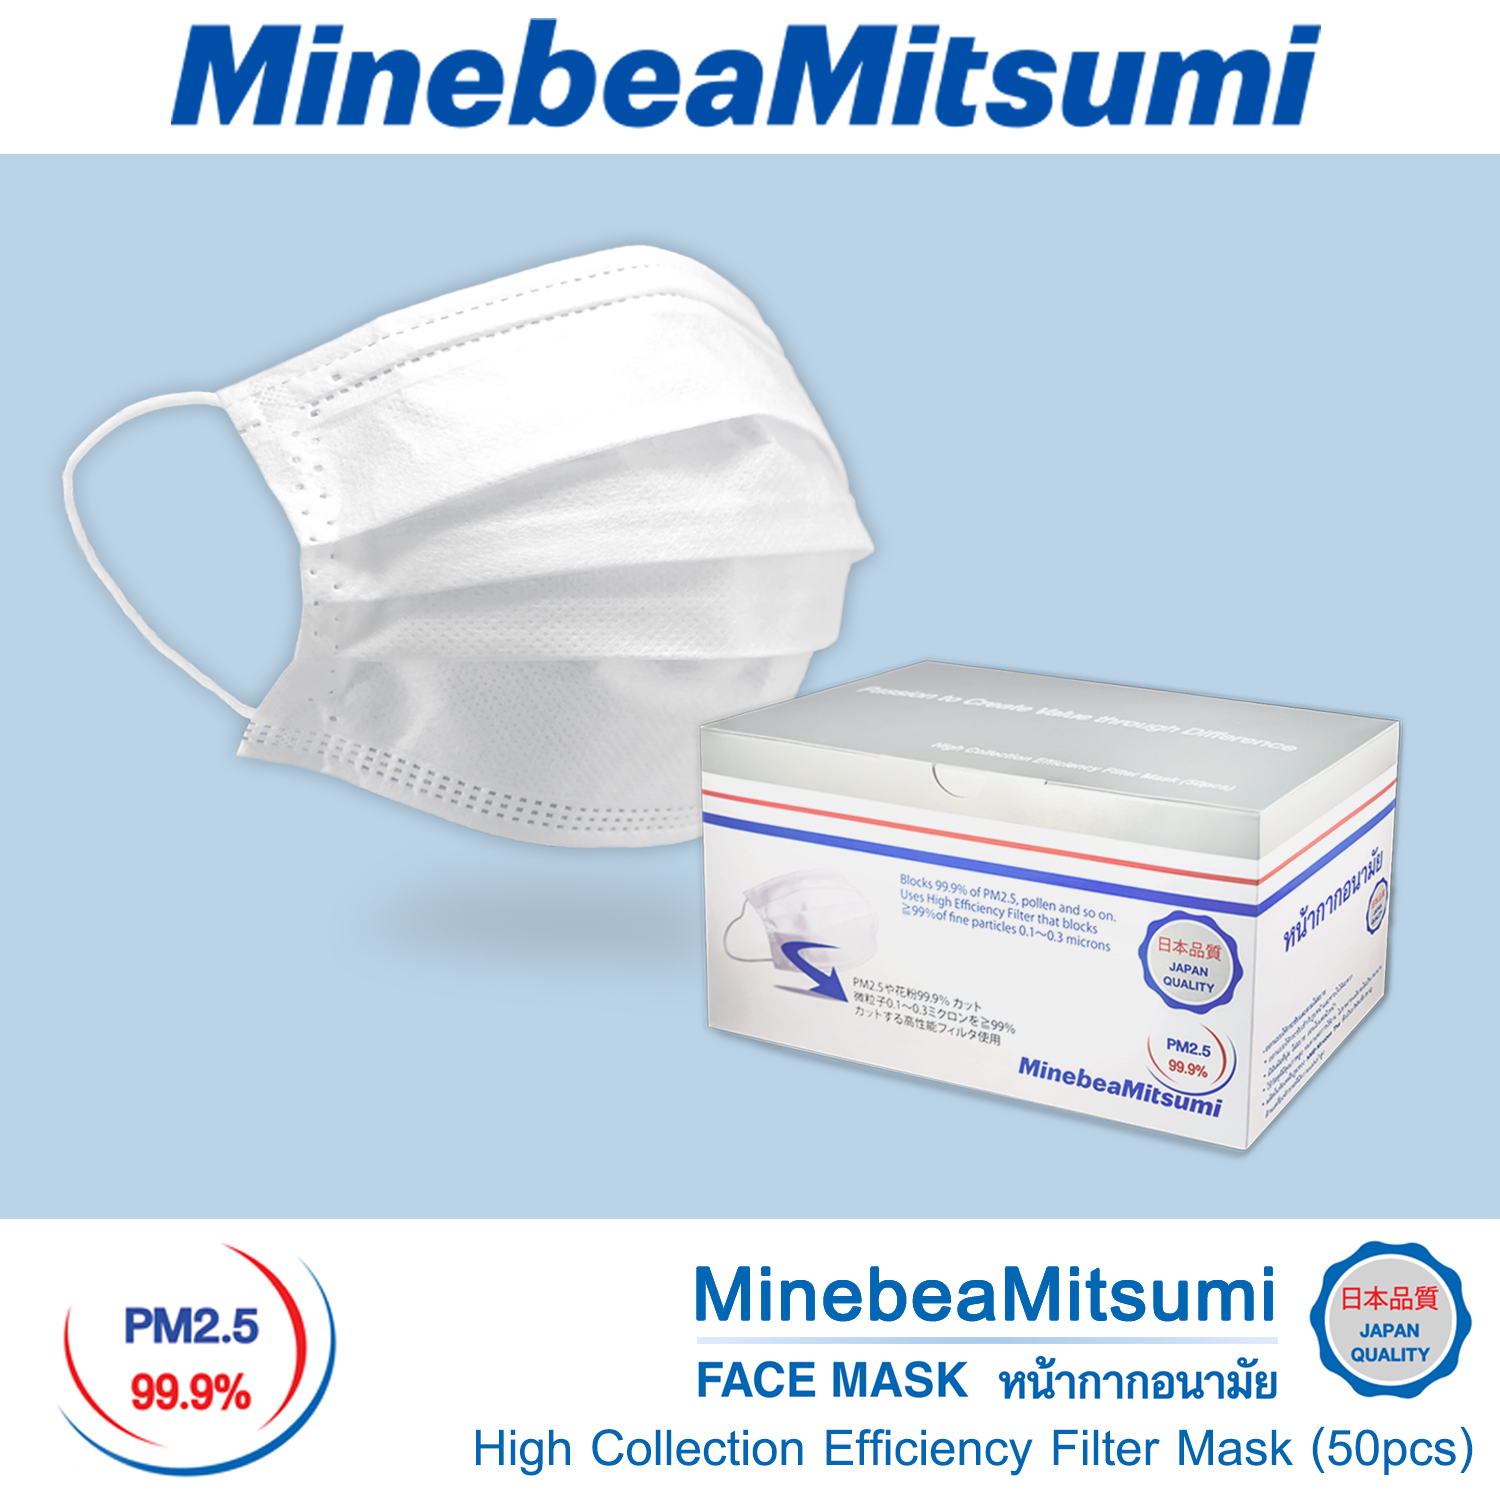 MinebeaMitsumi(มินีแบมิตซูมิ) หน้ากากอนามัยทั่วไป PM2.5 คุณภาพญี่ปุ่นโดยบริษัทญี่ปุ่น Japan Quality Mask 50ชิ้น